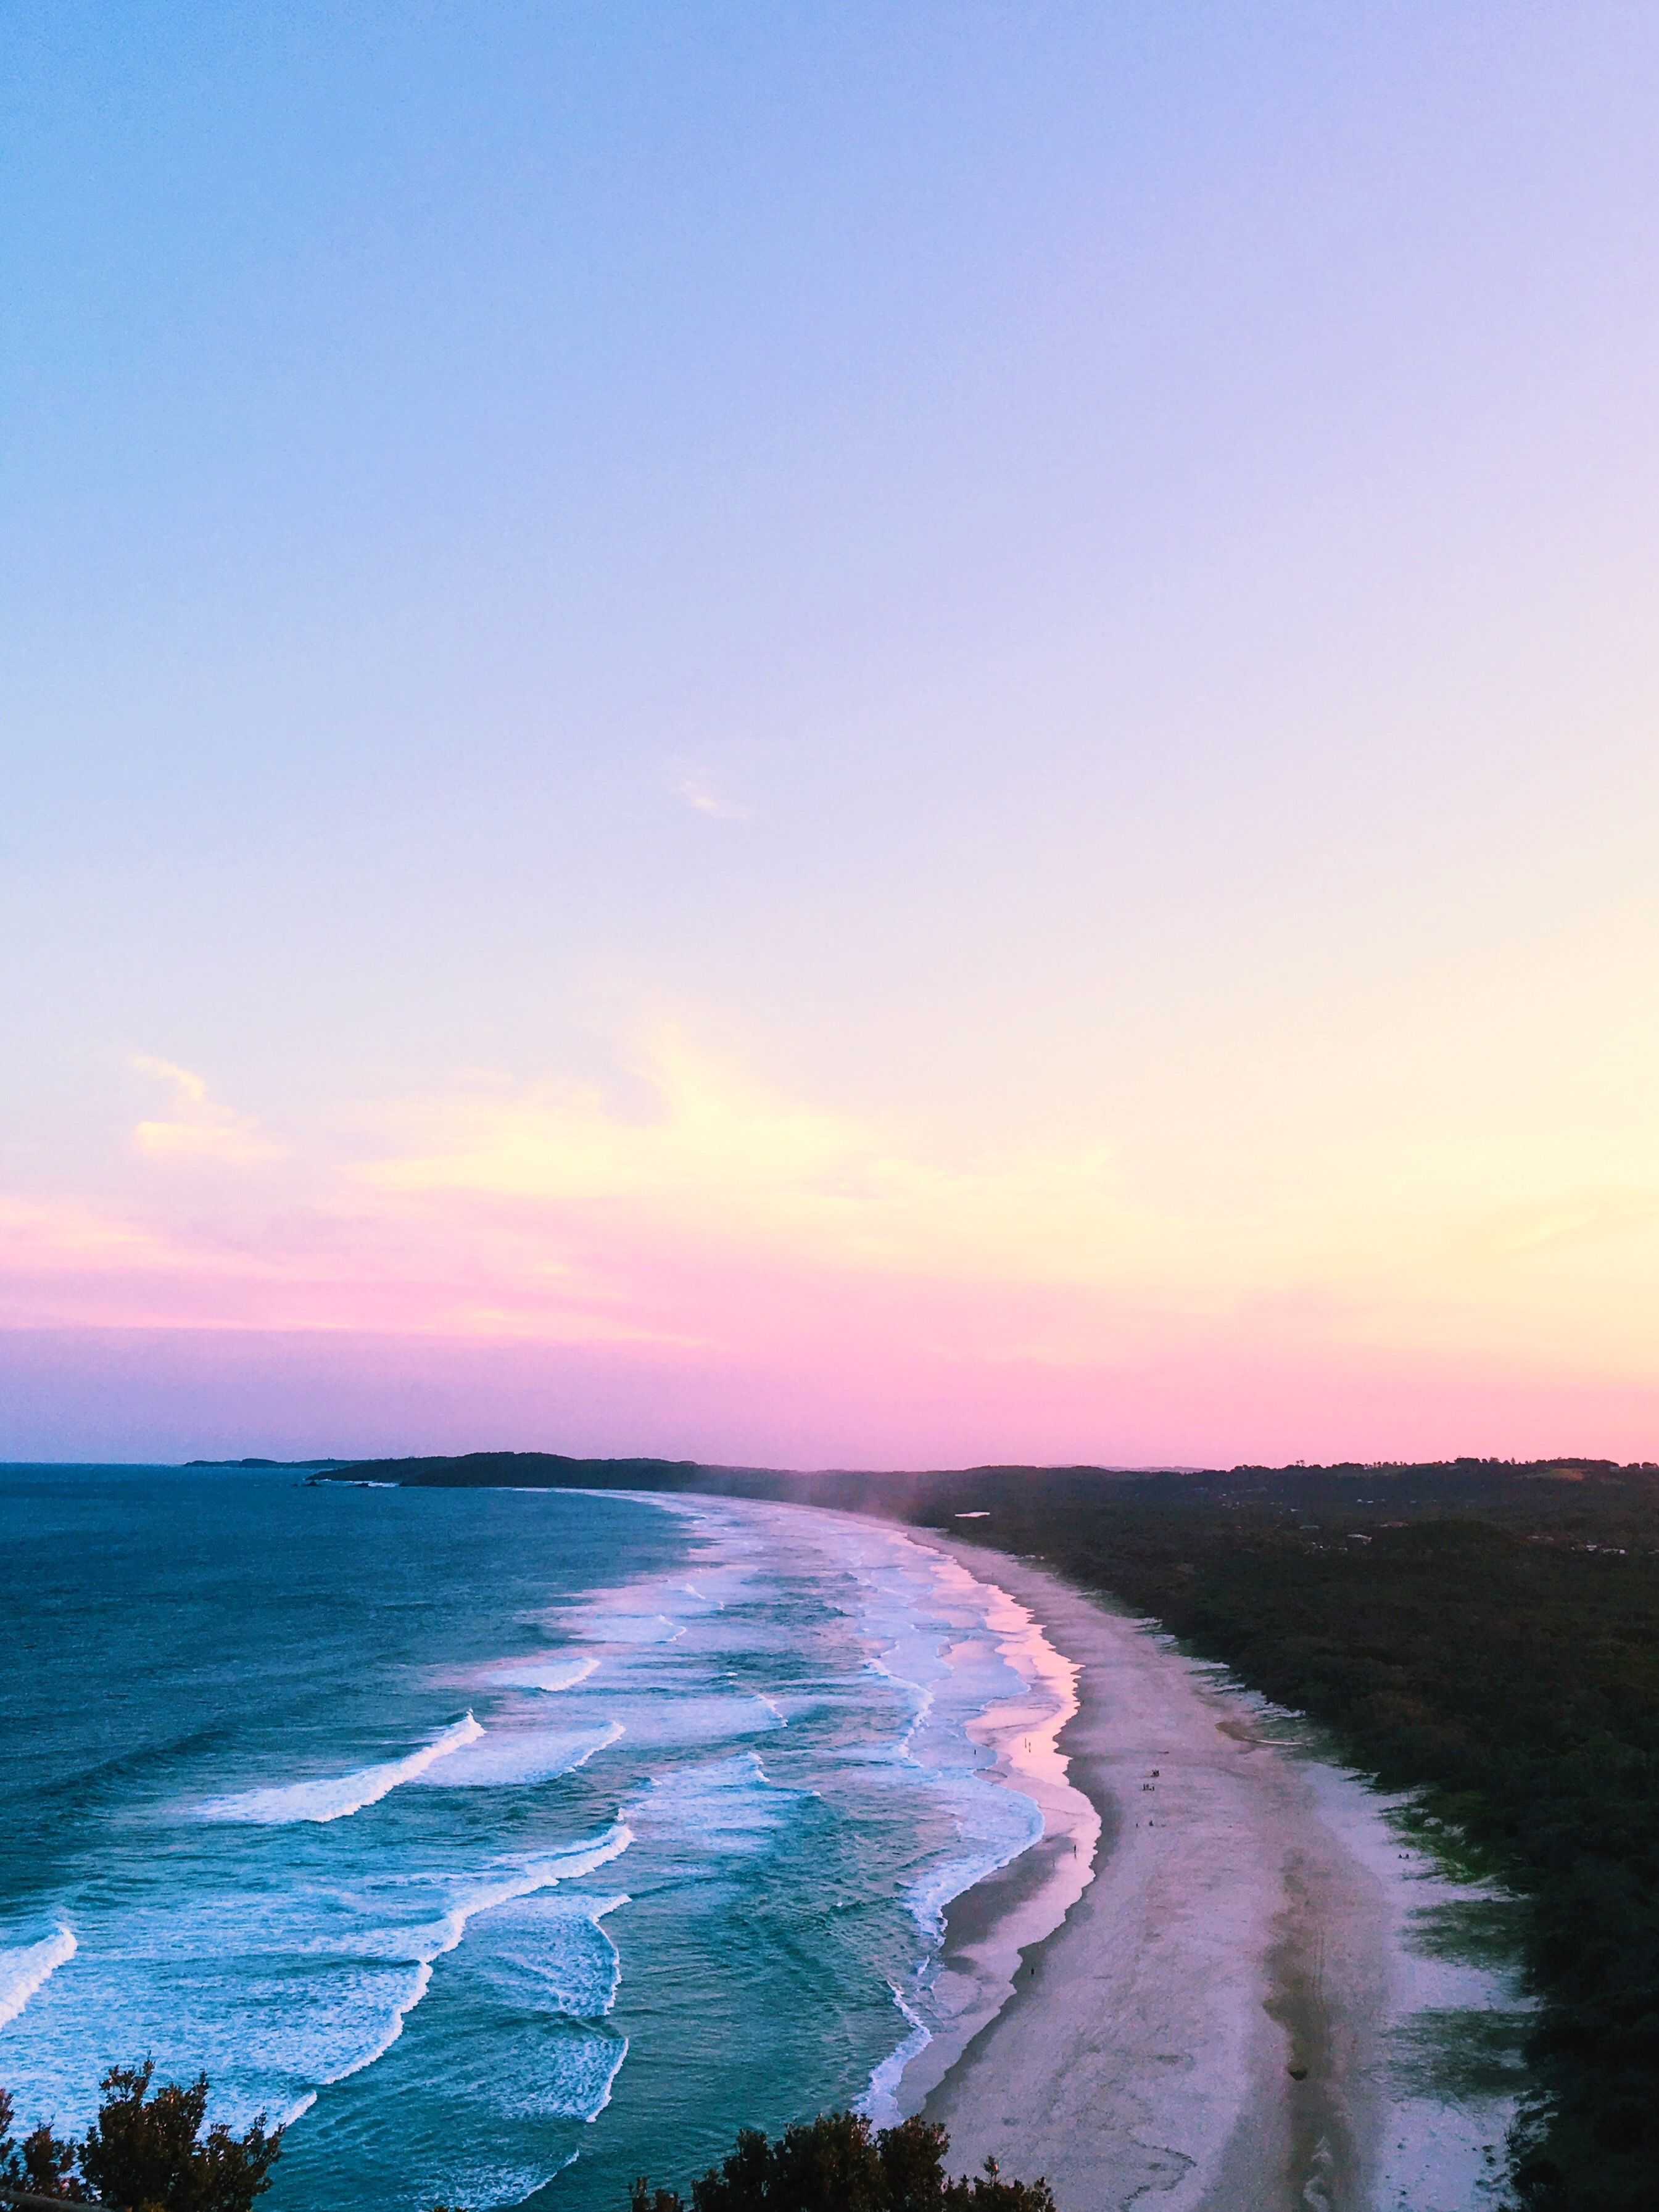 Byron Bay Australia, Beautiful Beach Sunset. Scenery, Beach, Australia travel